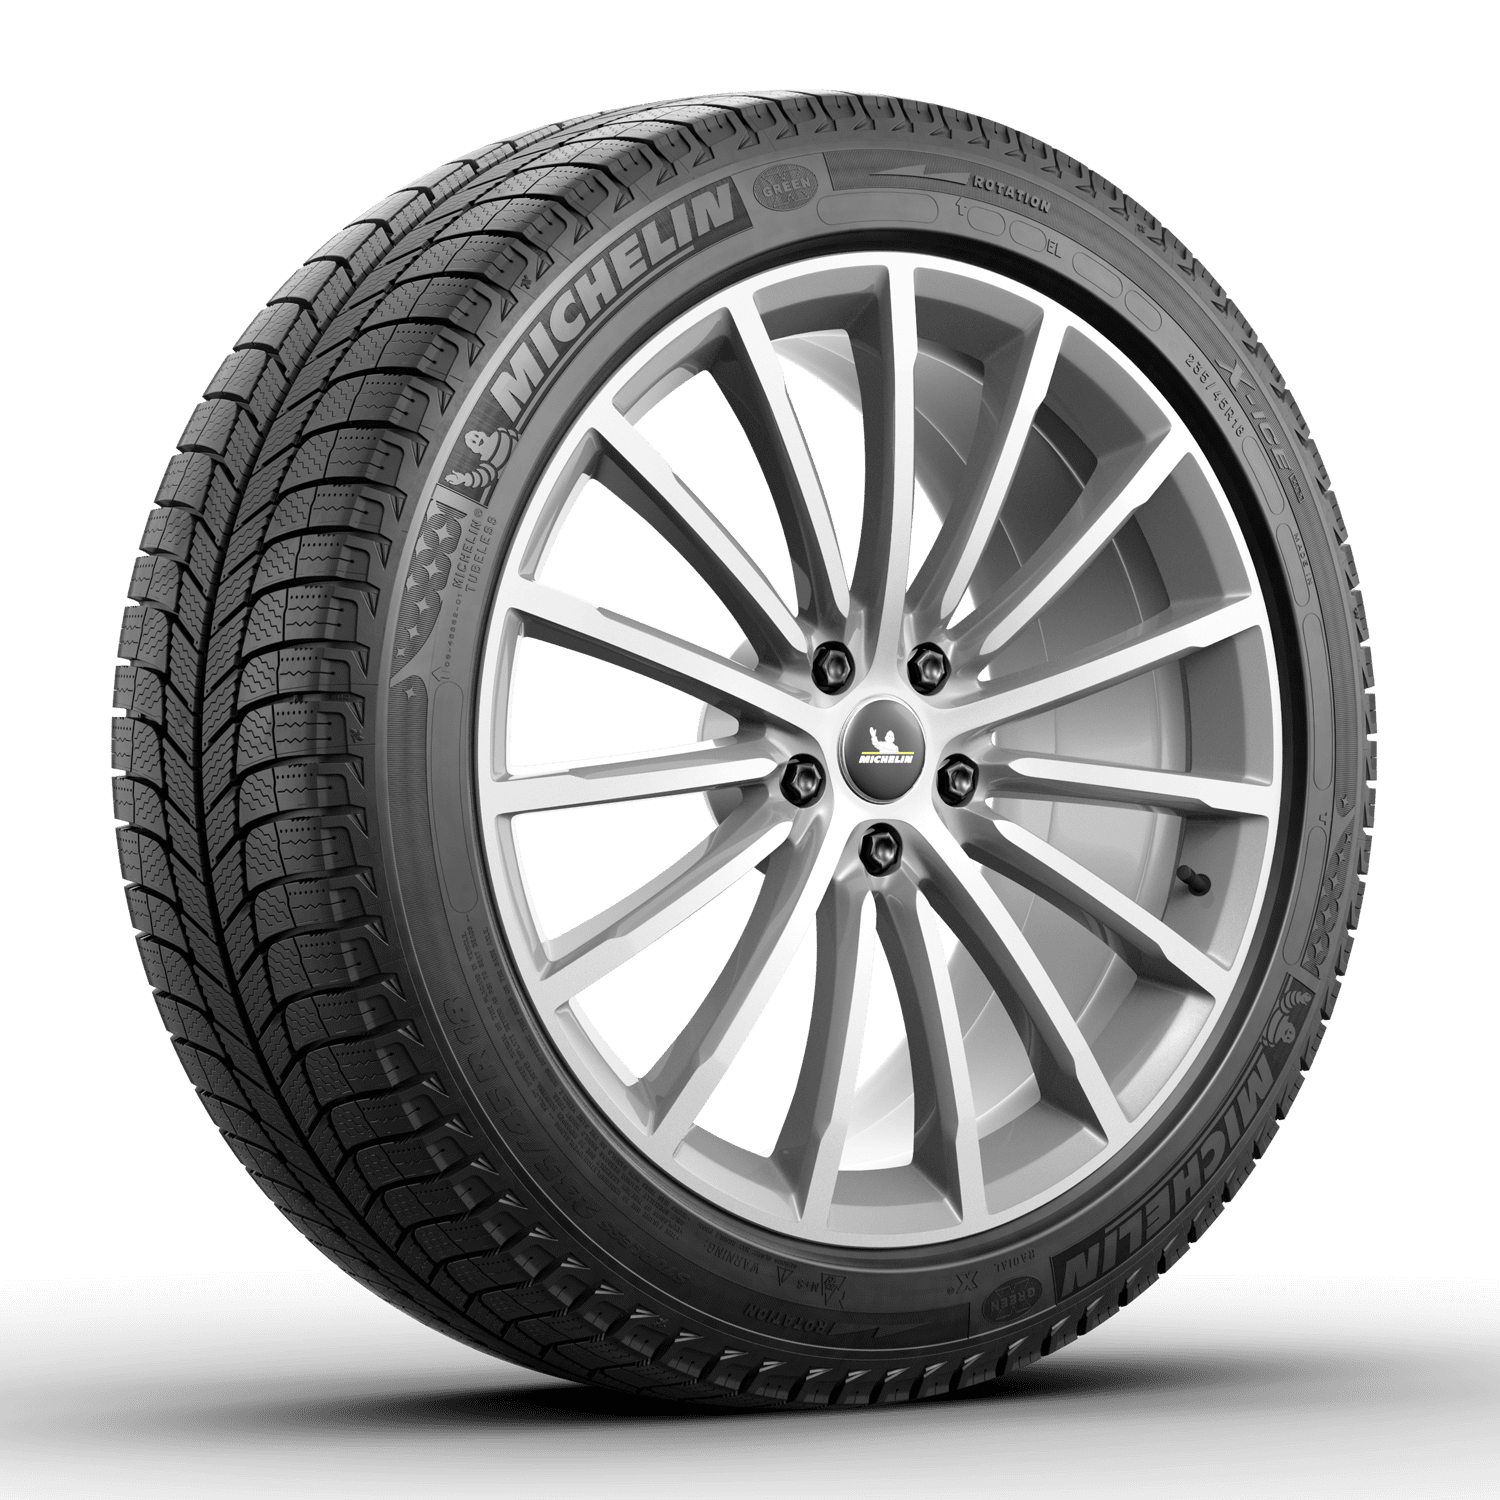 Michelin X-Ice Xi3 225/55R18 98 H Tire